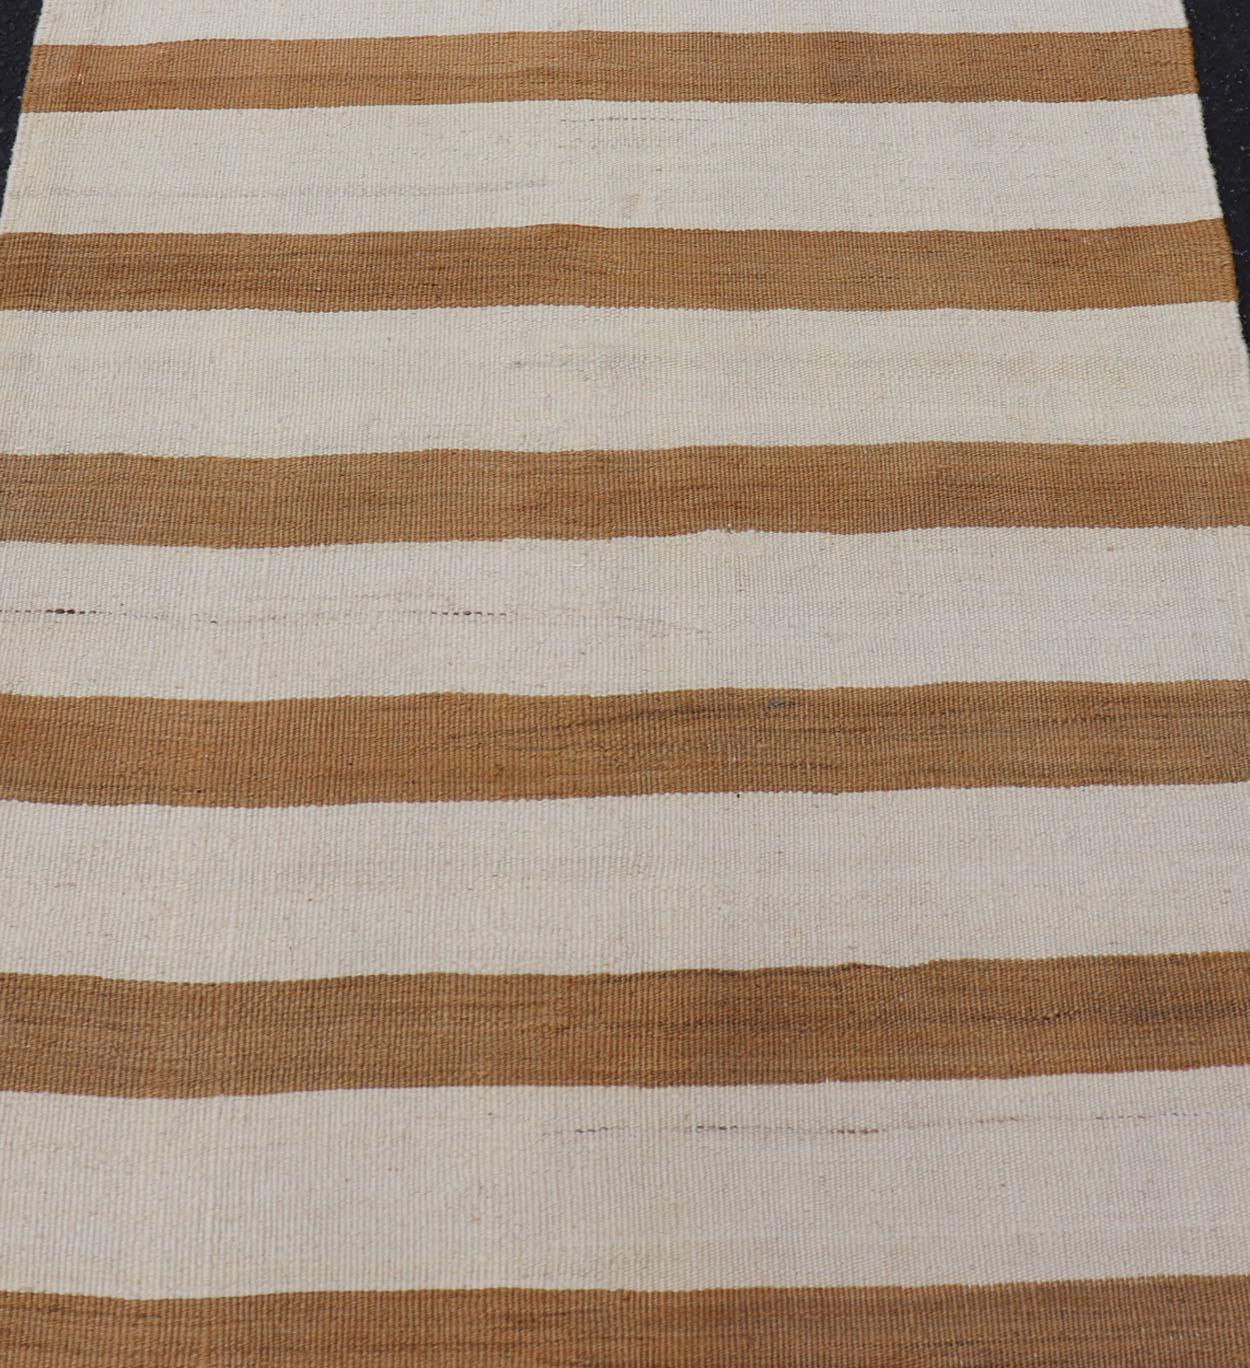 Vintage Turkish Kilim Rug with Horizontal Stripes in Light Brown, caramel and light Cream. Keivan Woven Arts rug EN-179886, country of origin / type: Turkey / Kilim, circa Mid-20th Century.

Measures: 2'5 x 8'5 

This vintage flat-woven kilim short